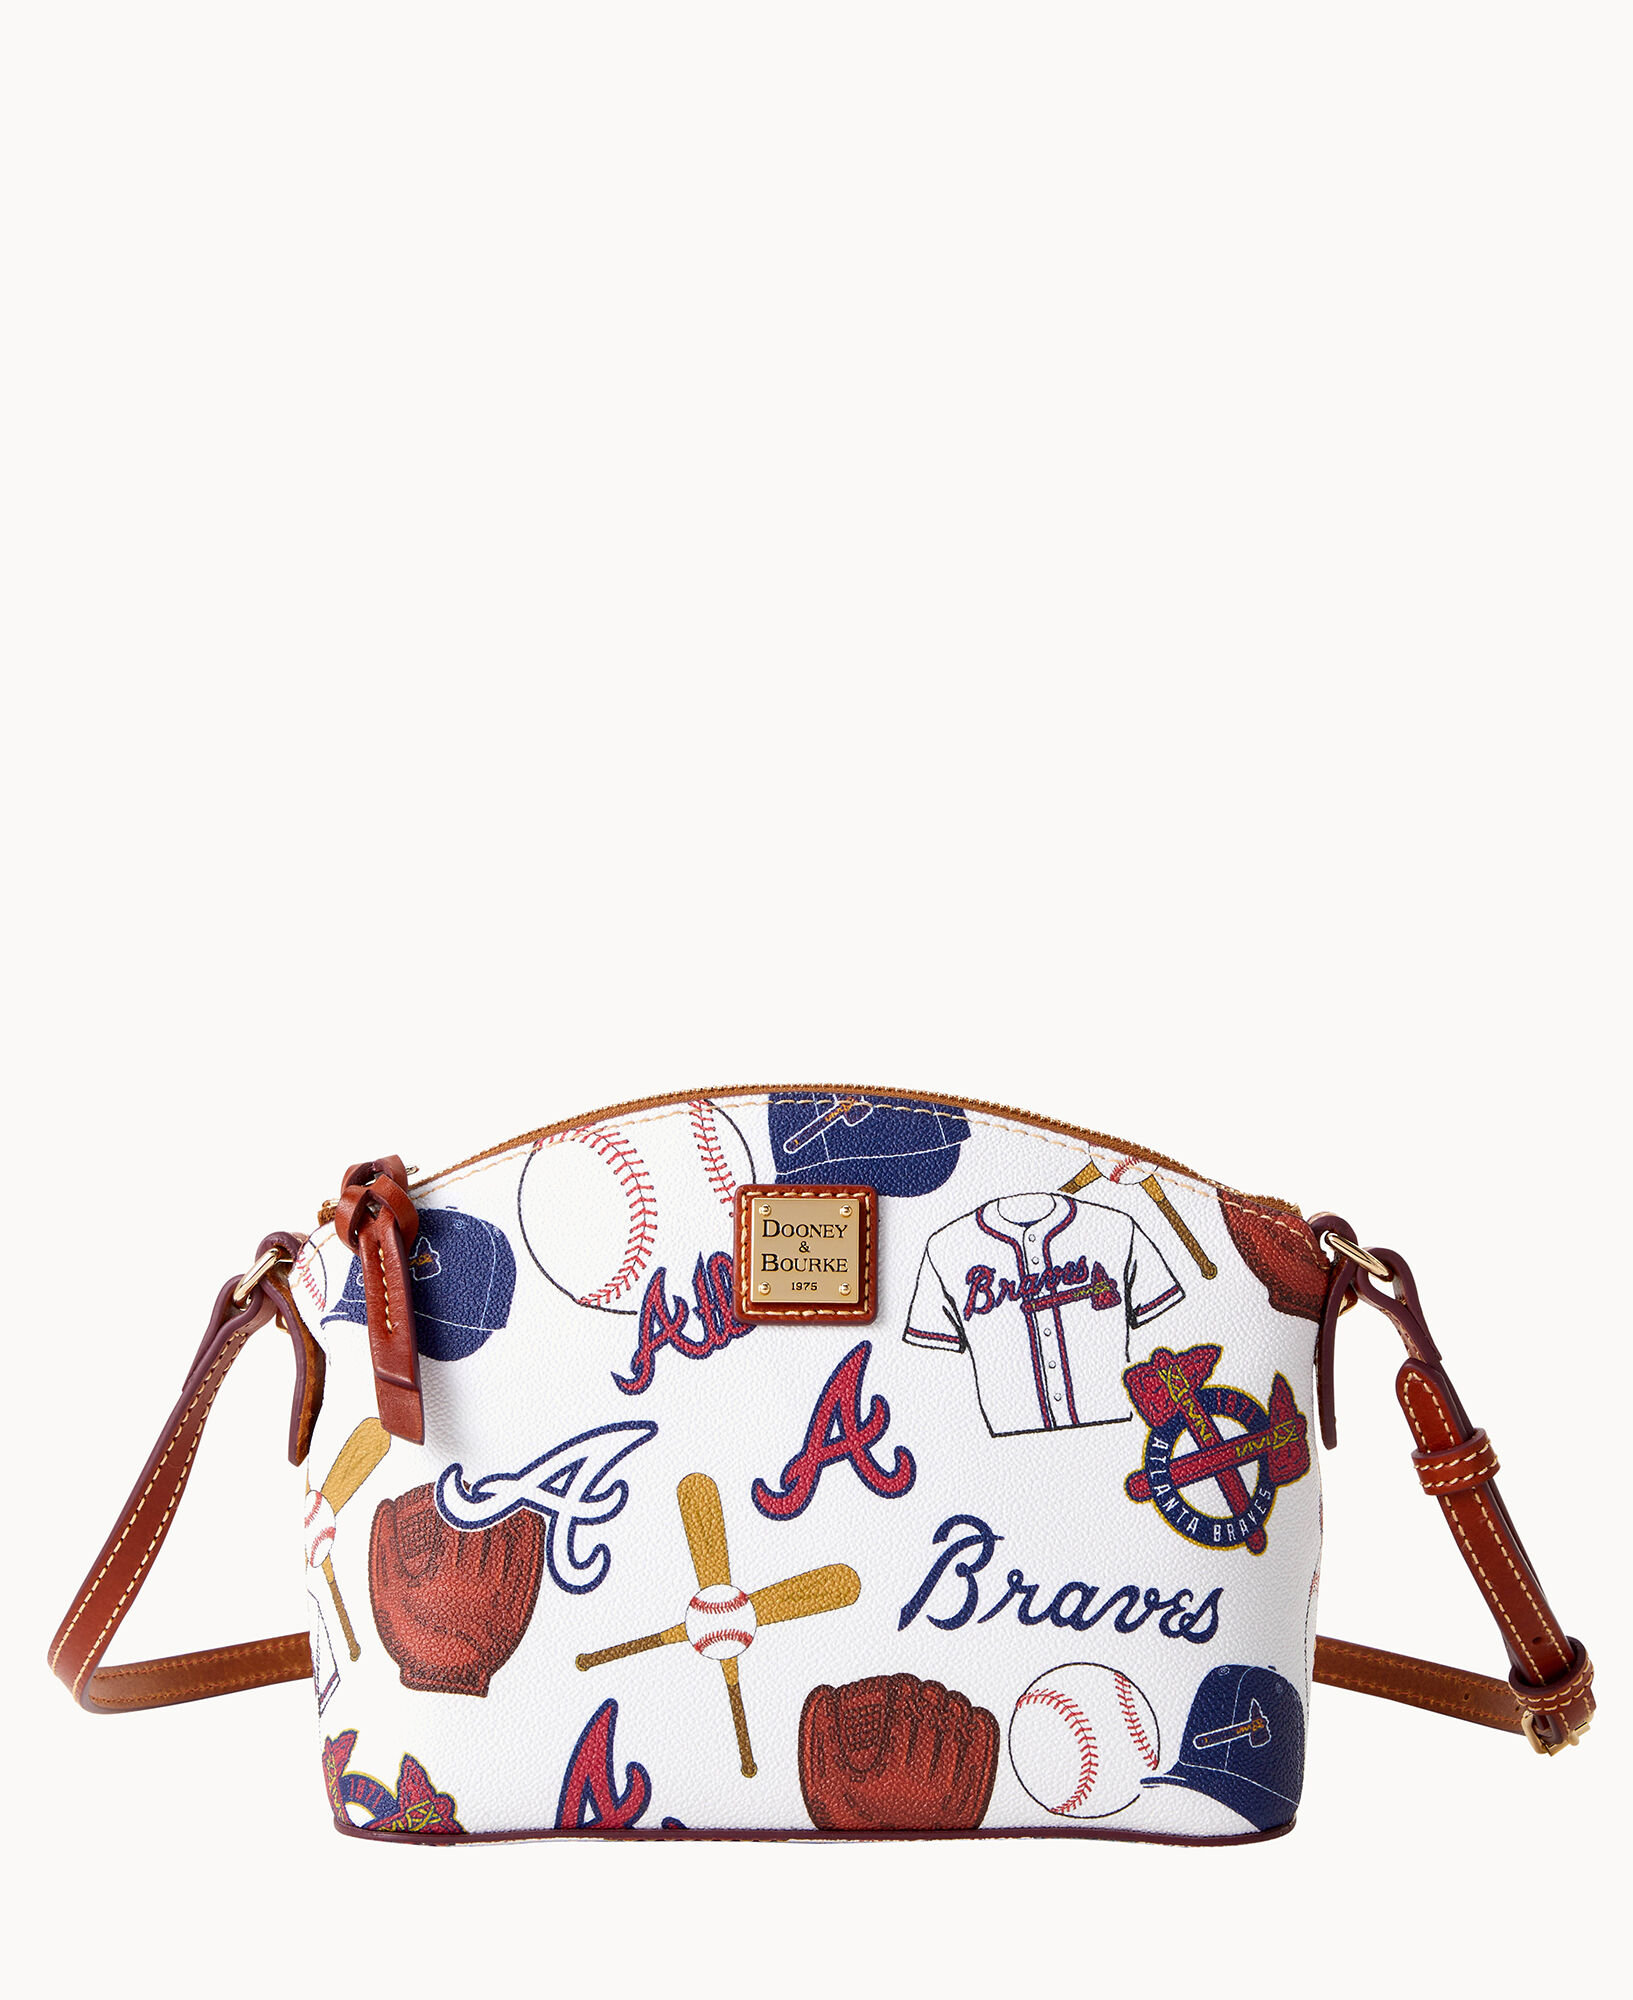 Atlanta Braves Adjustable Crossbody or Shoulder Purse Bag MLB 